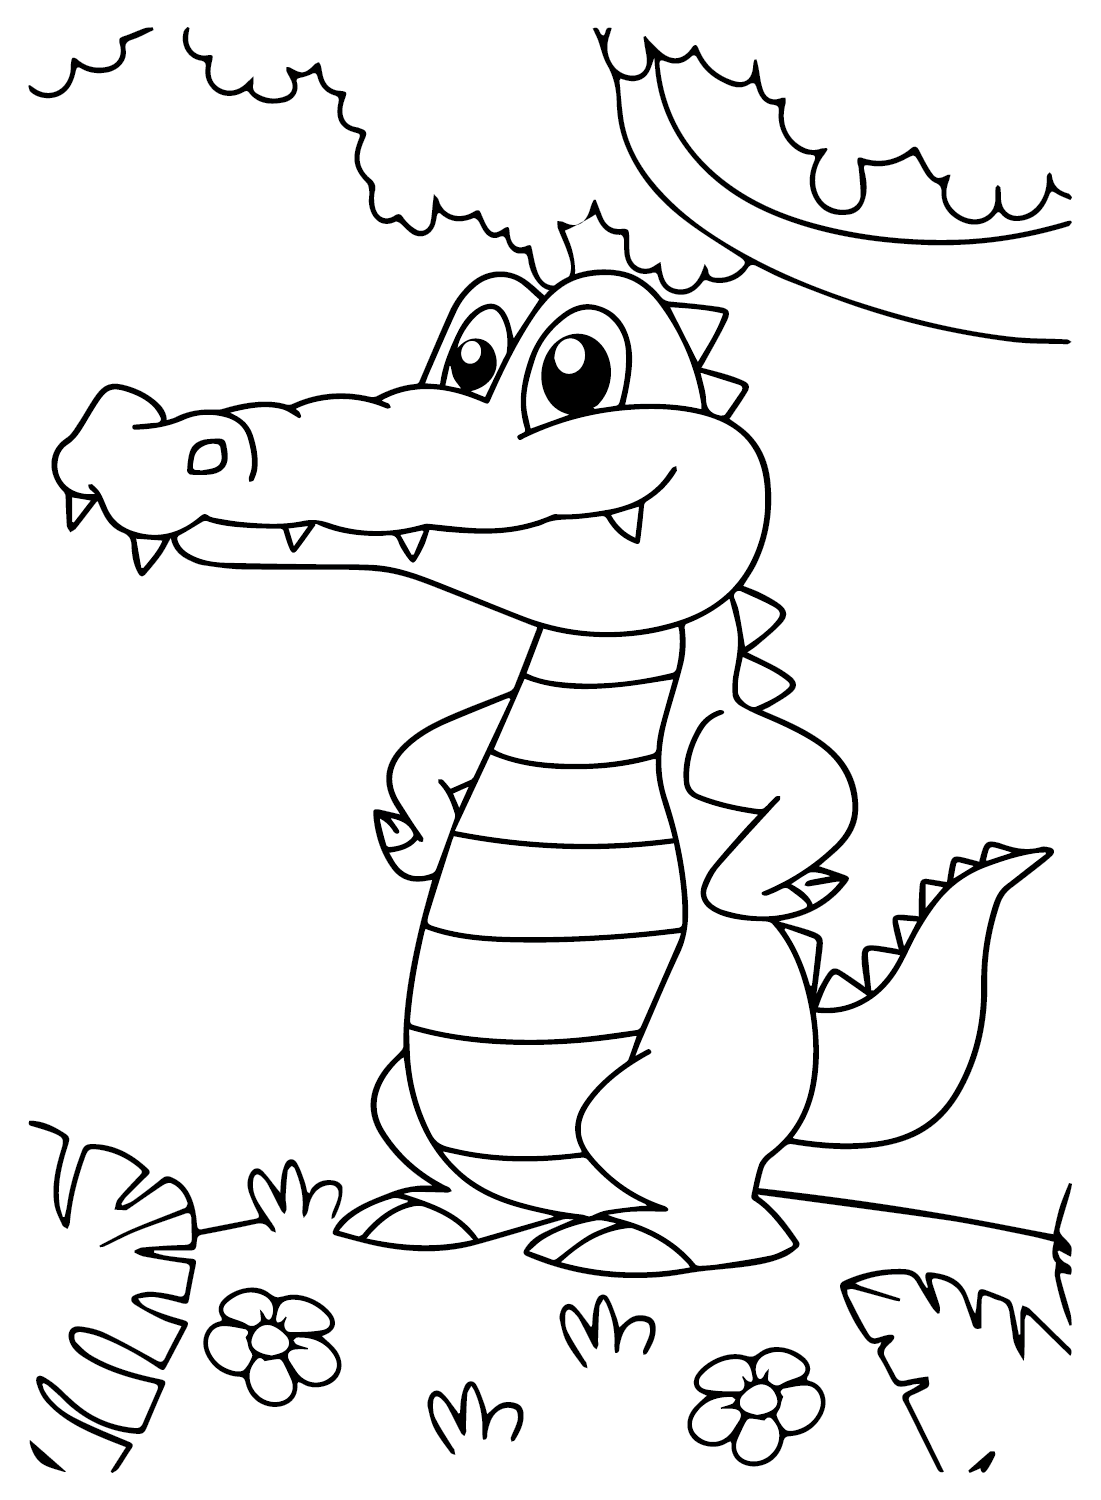 Krokodil-Cartoon-Malseite von Crocodile